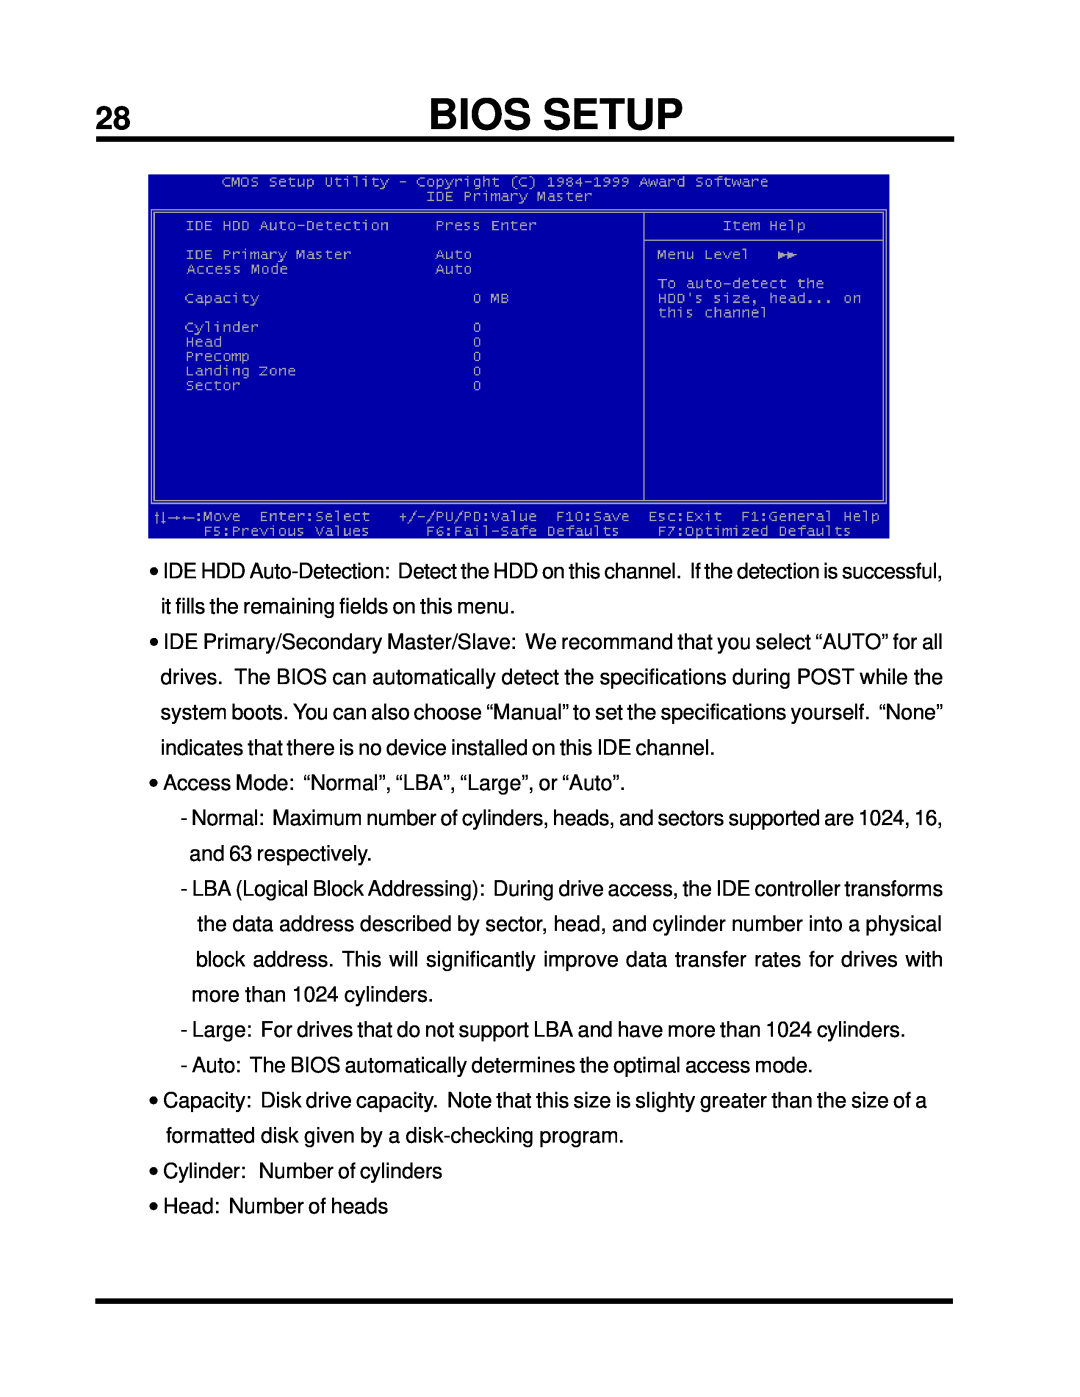 Intel TS-ASP3 user manual Bios Setup, •Access Mode: “Normal”, “LBA”, “Large”, or “Auto” 